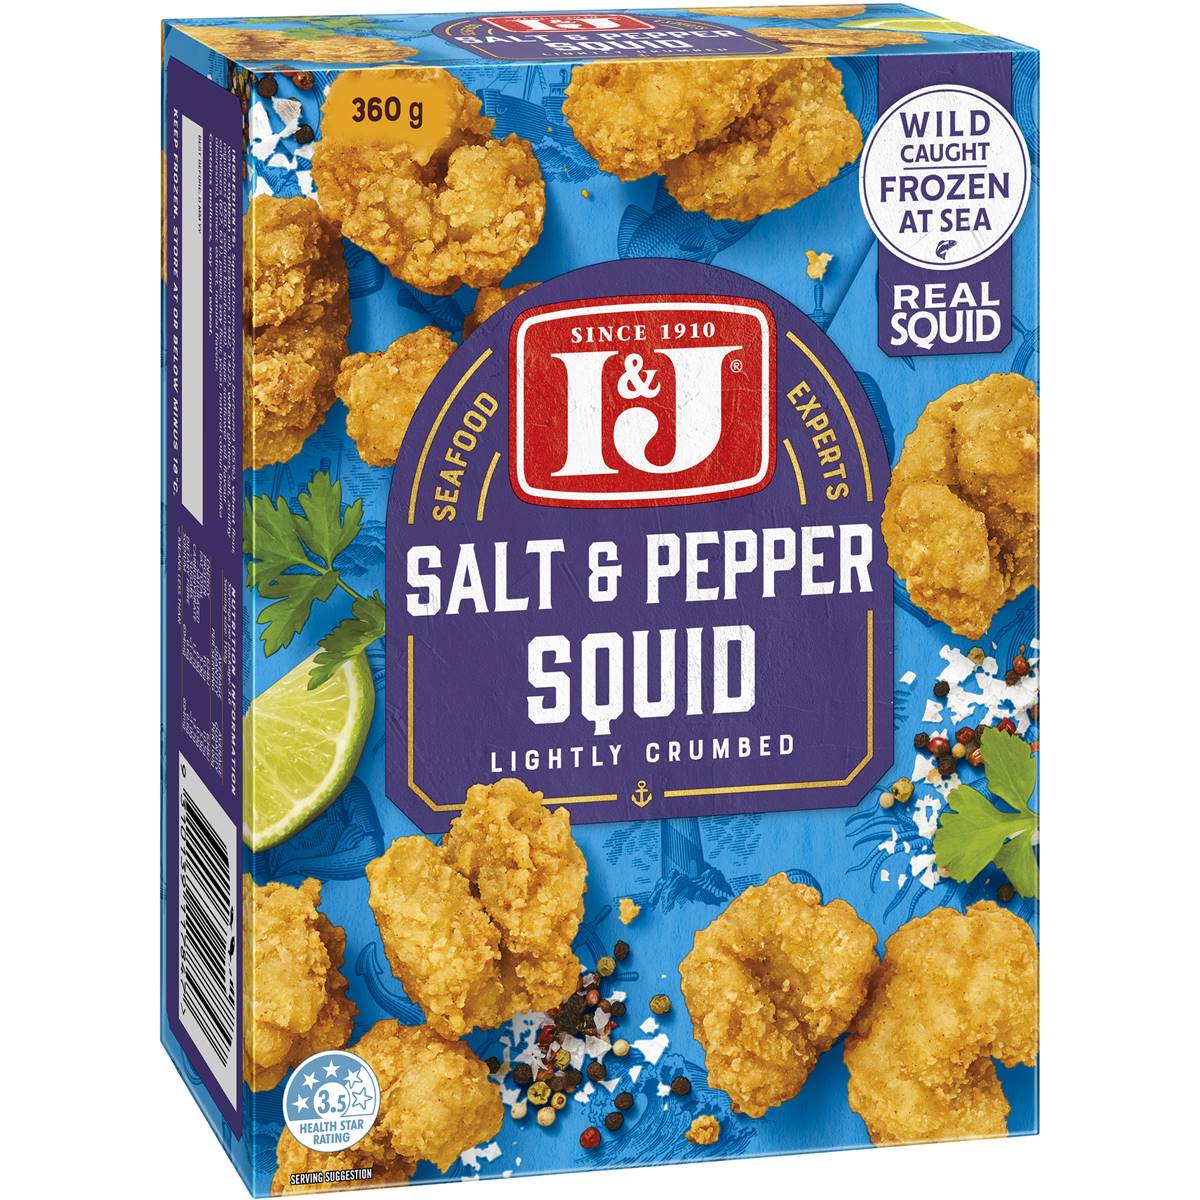 Calories in I & J Salt & Pepper Squid